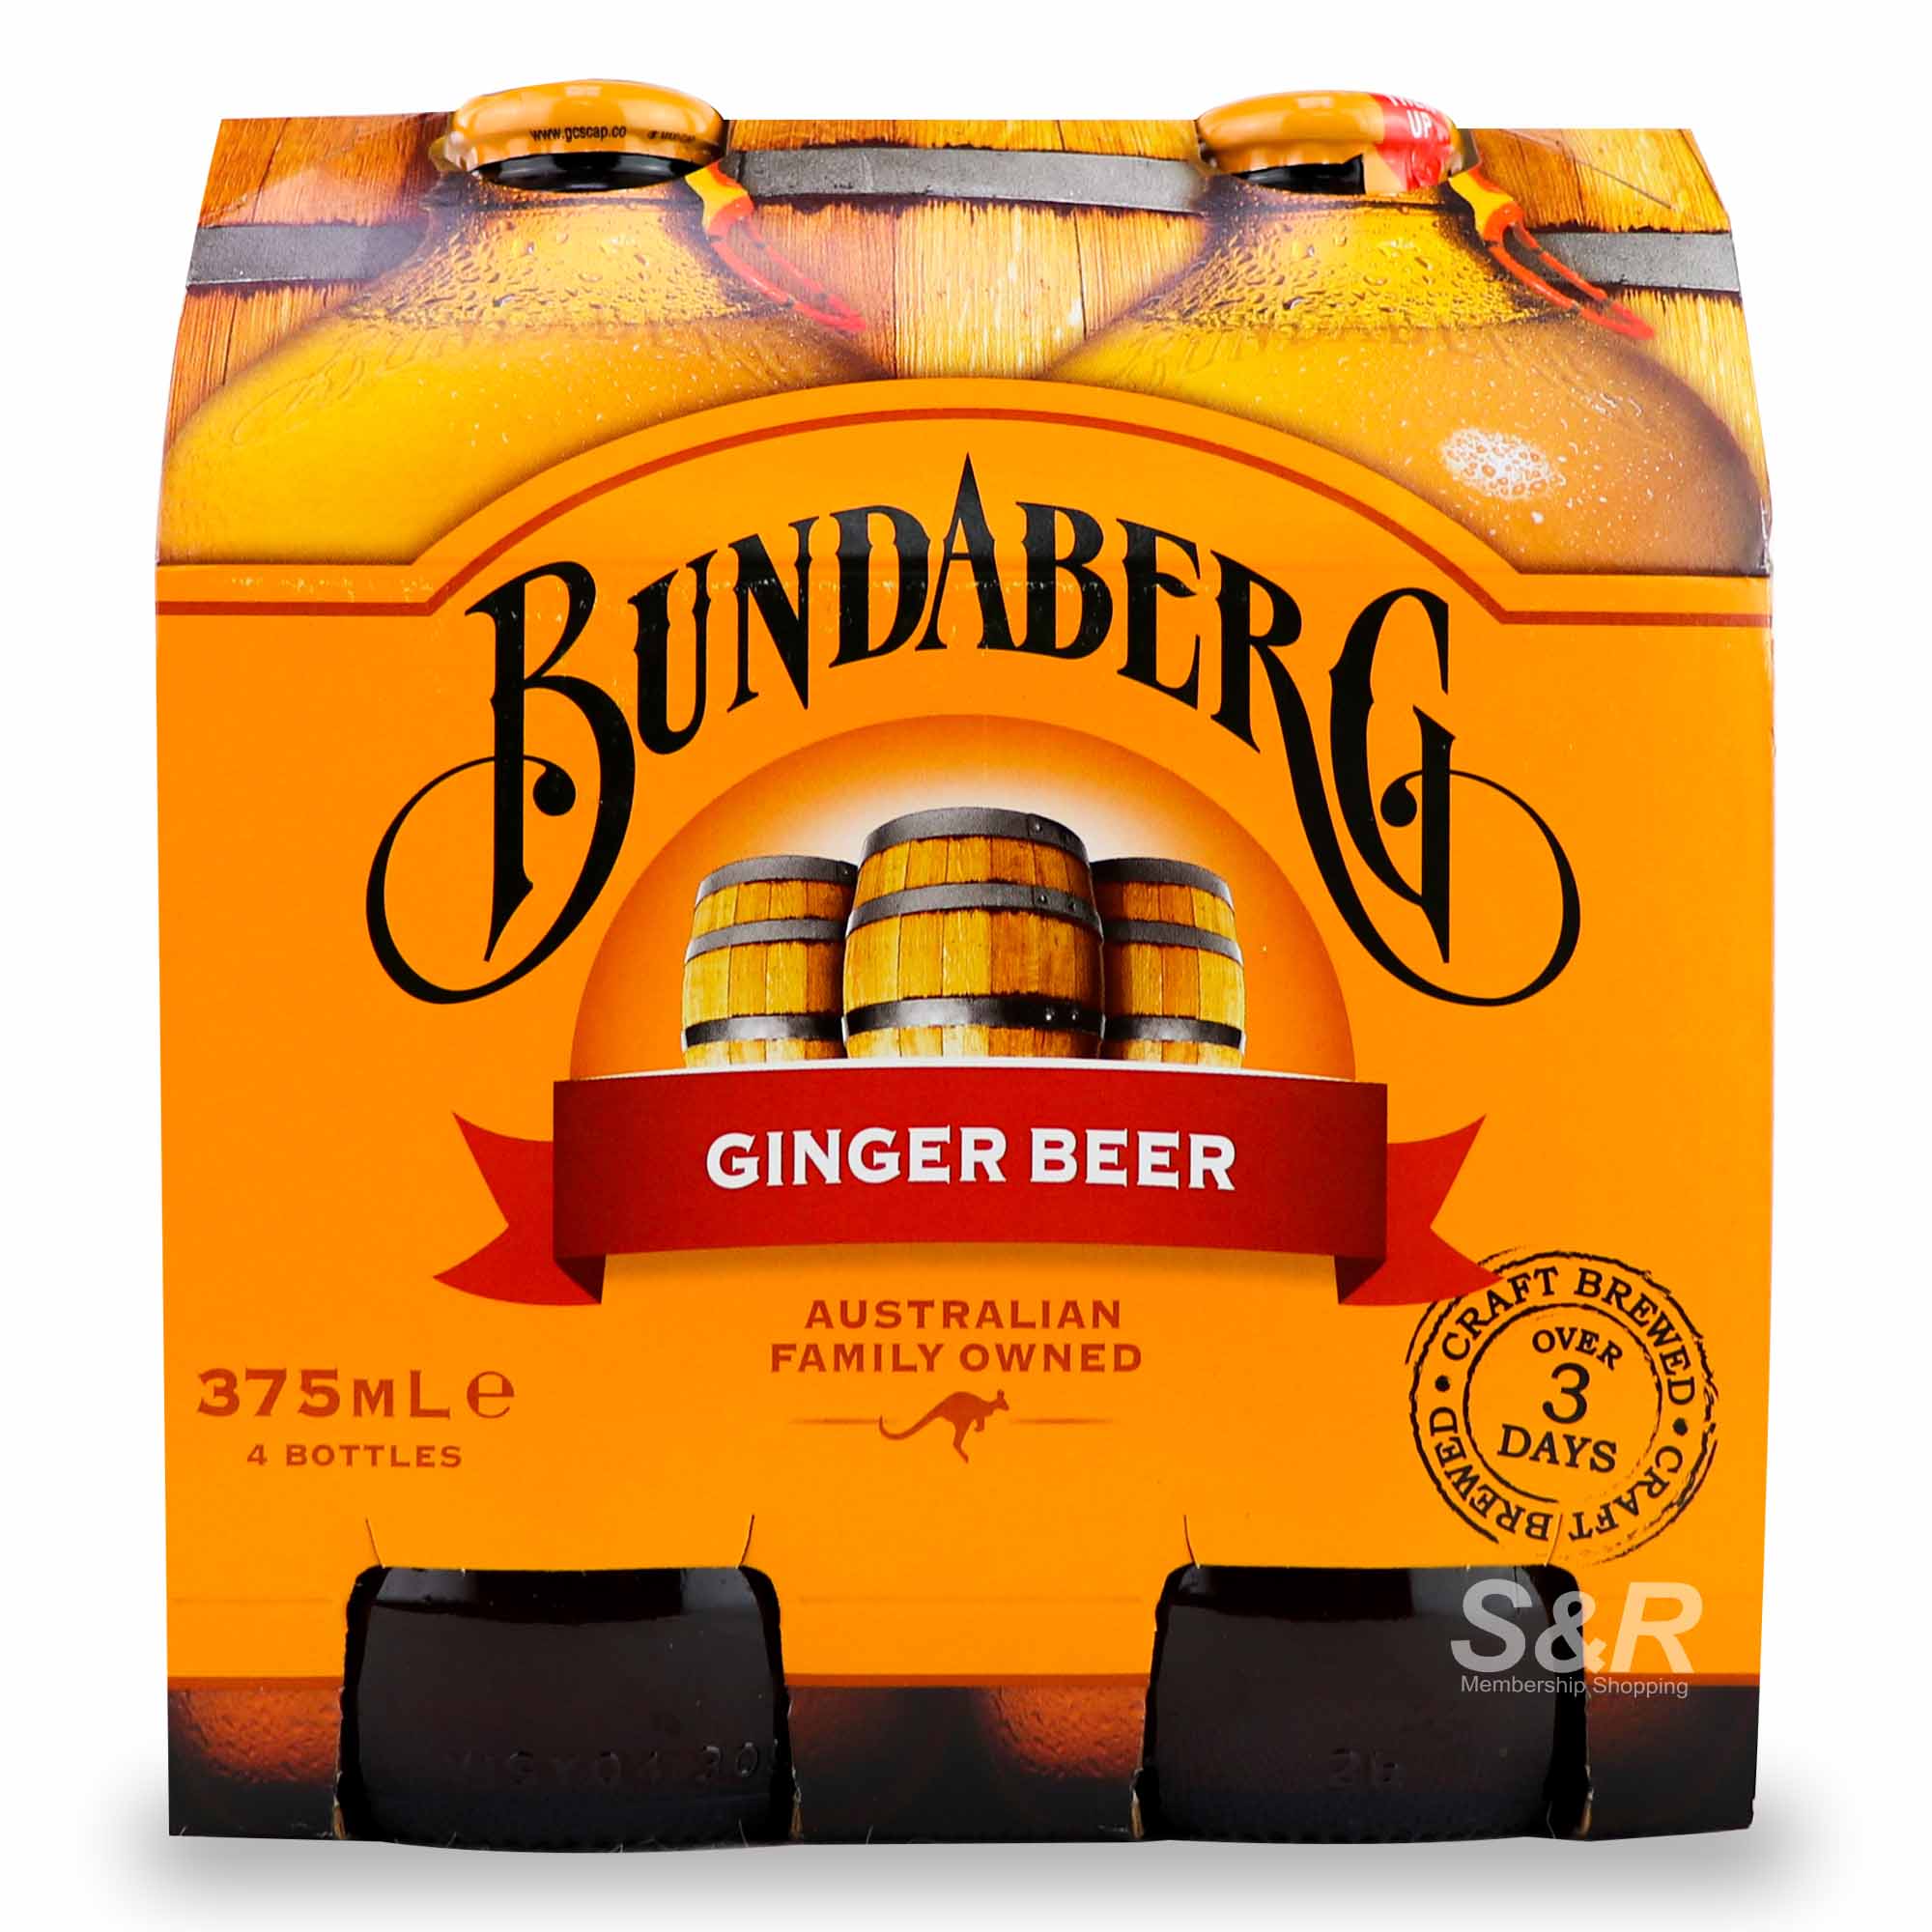 Bundaberg Ginger Beer 4 bottles